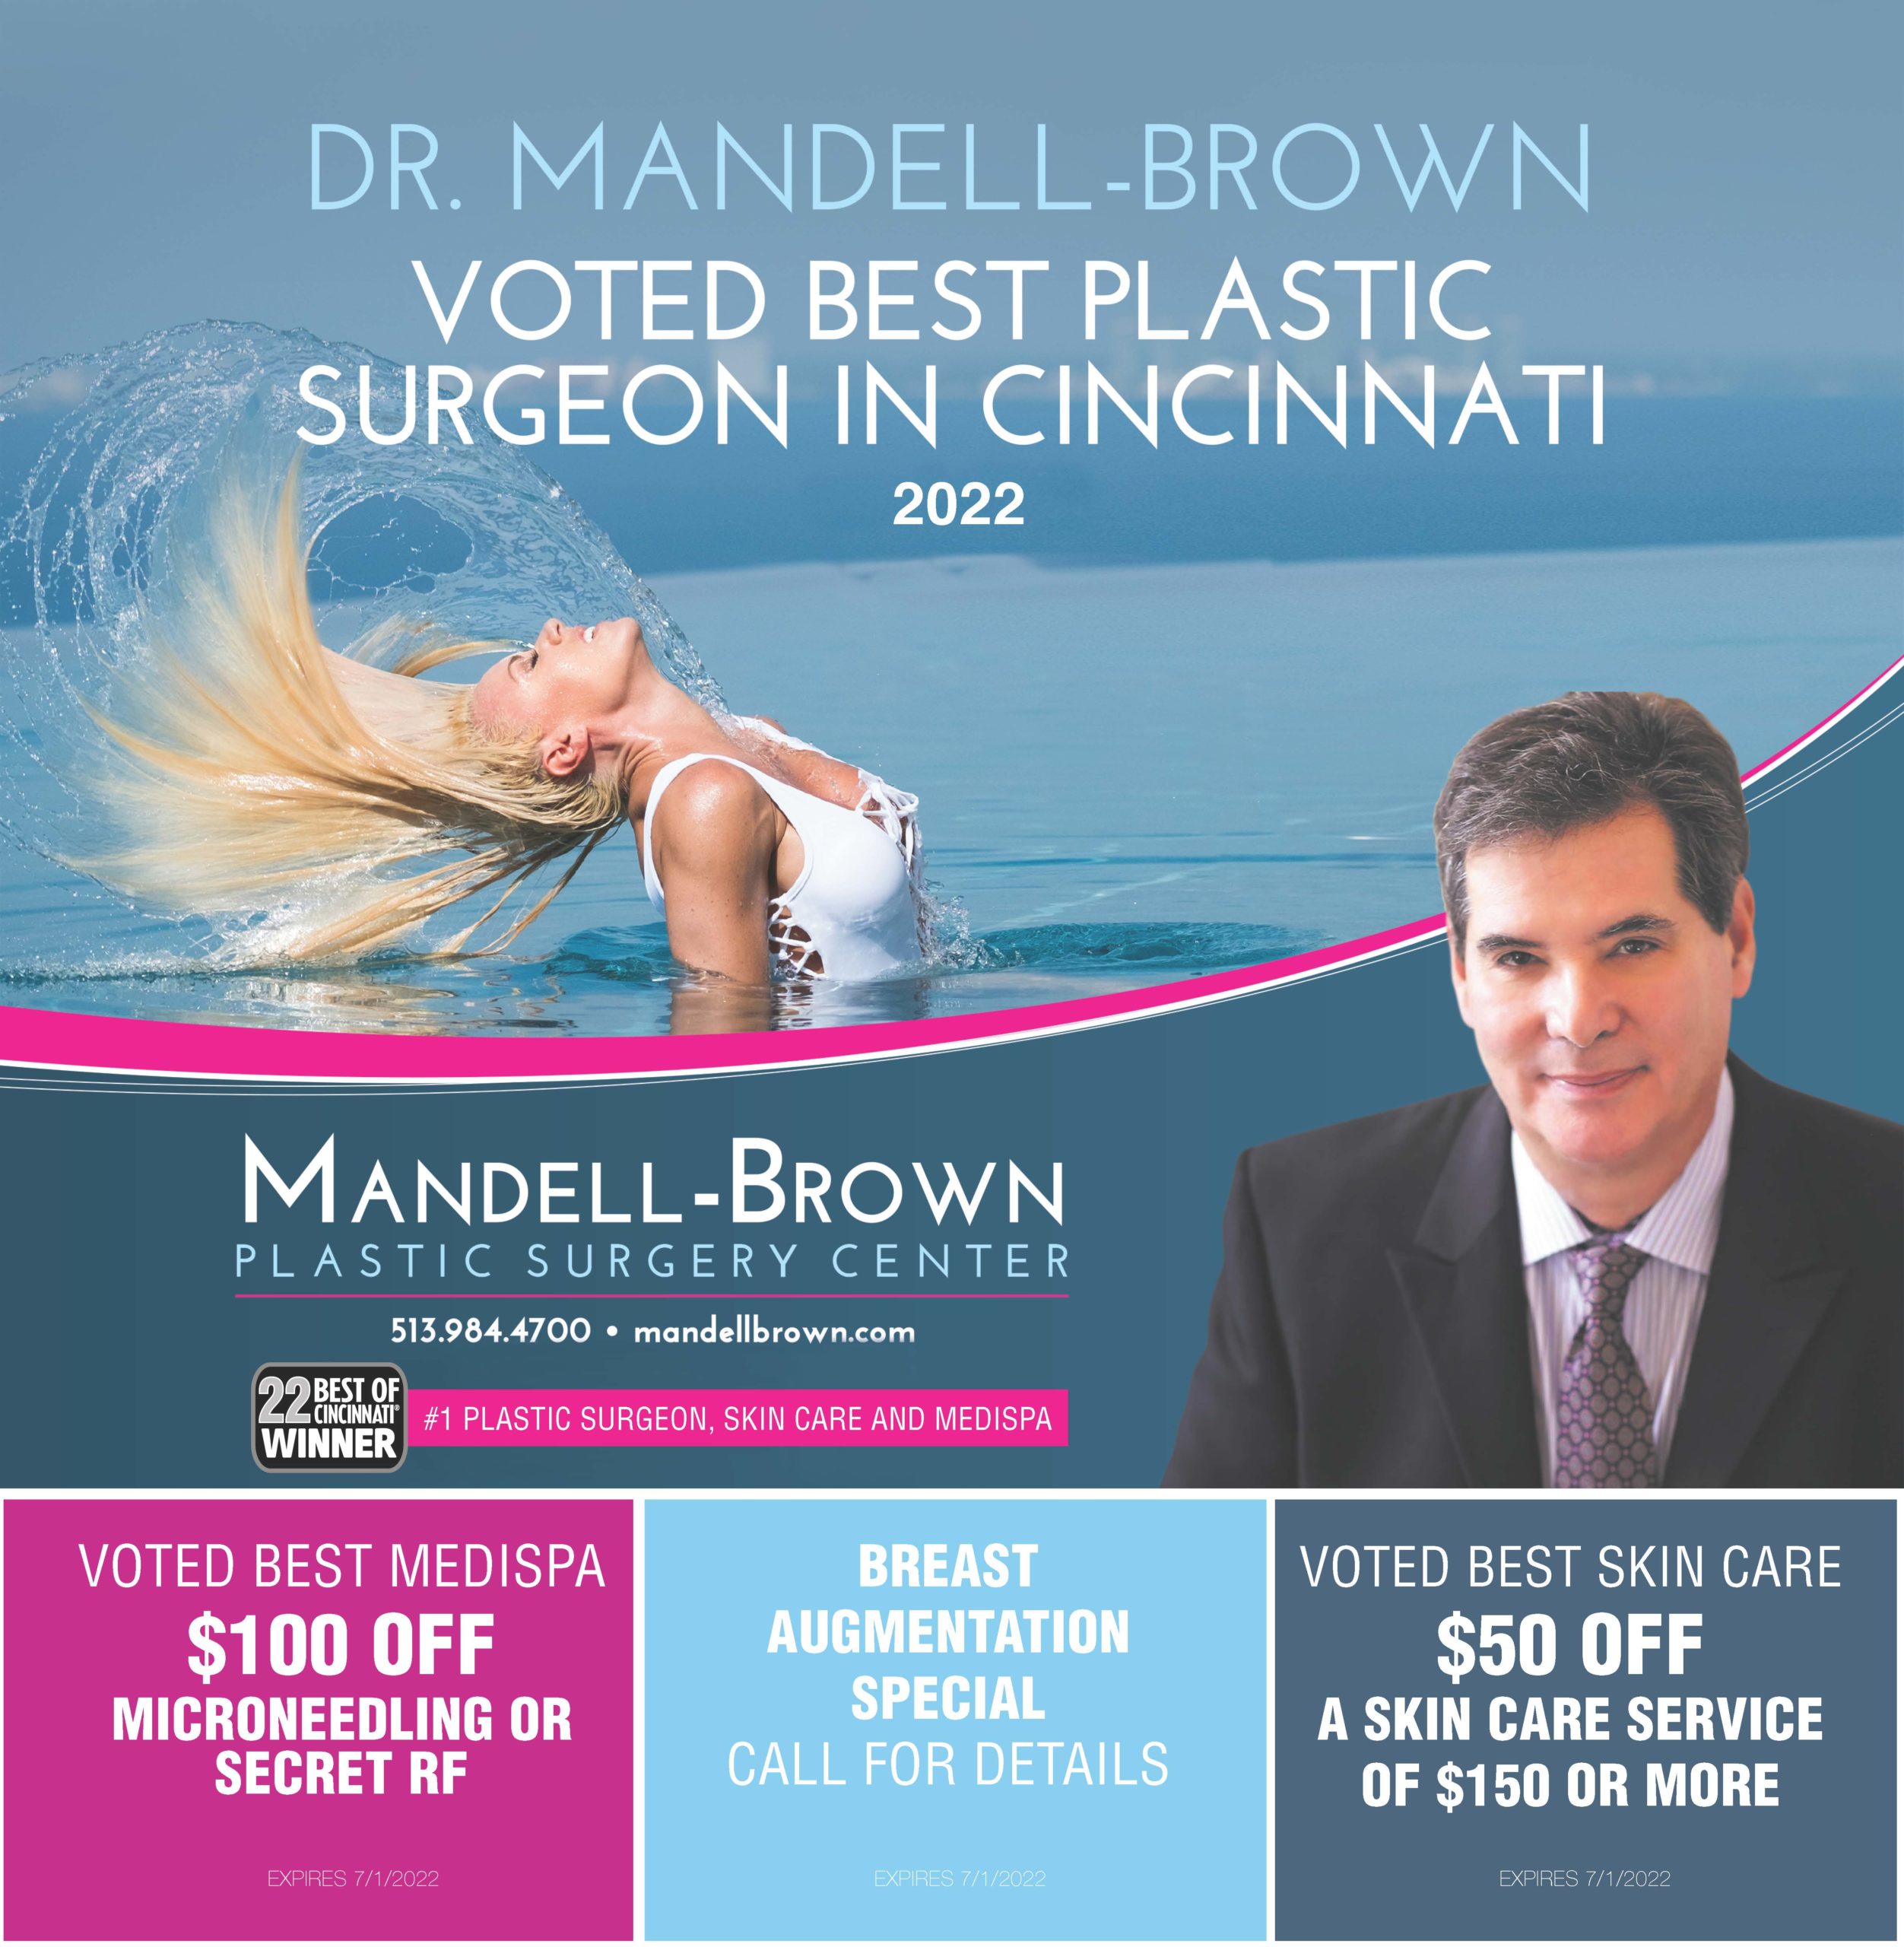 Dr. Mandell-Brown - Voted Best Plastic Surgeon of Cincinnati 2022